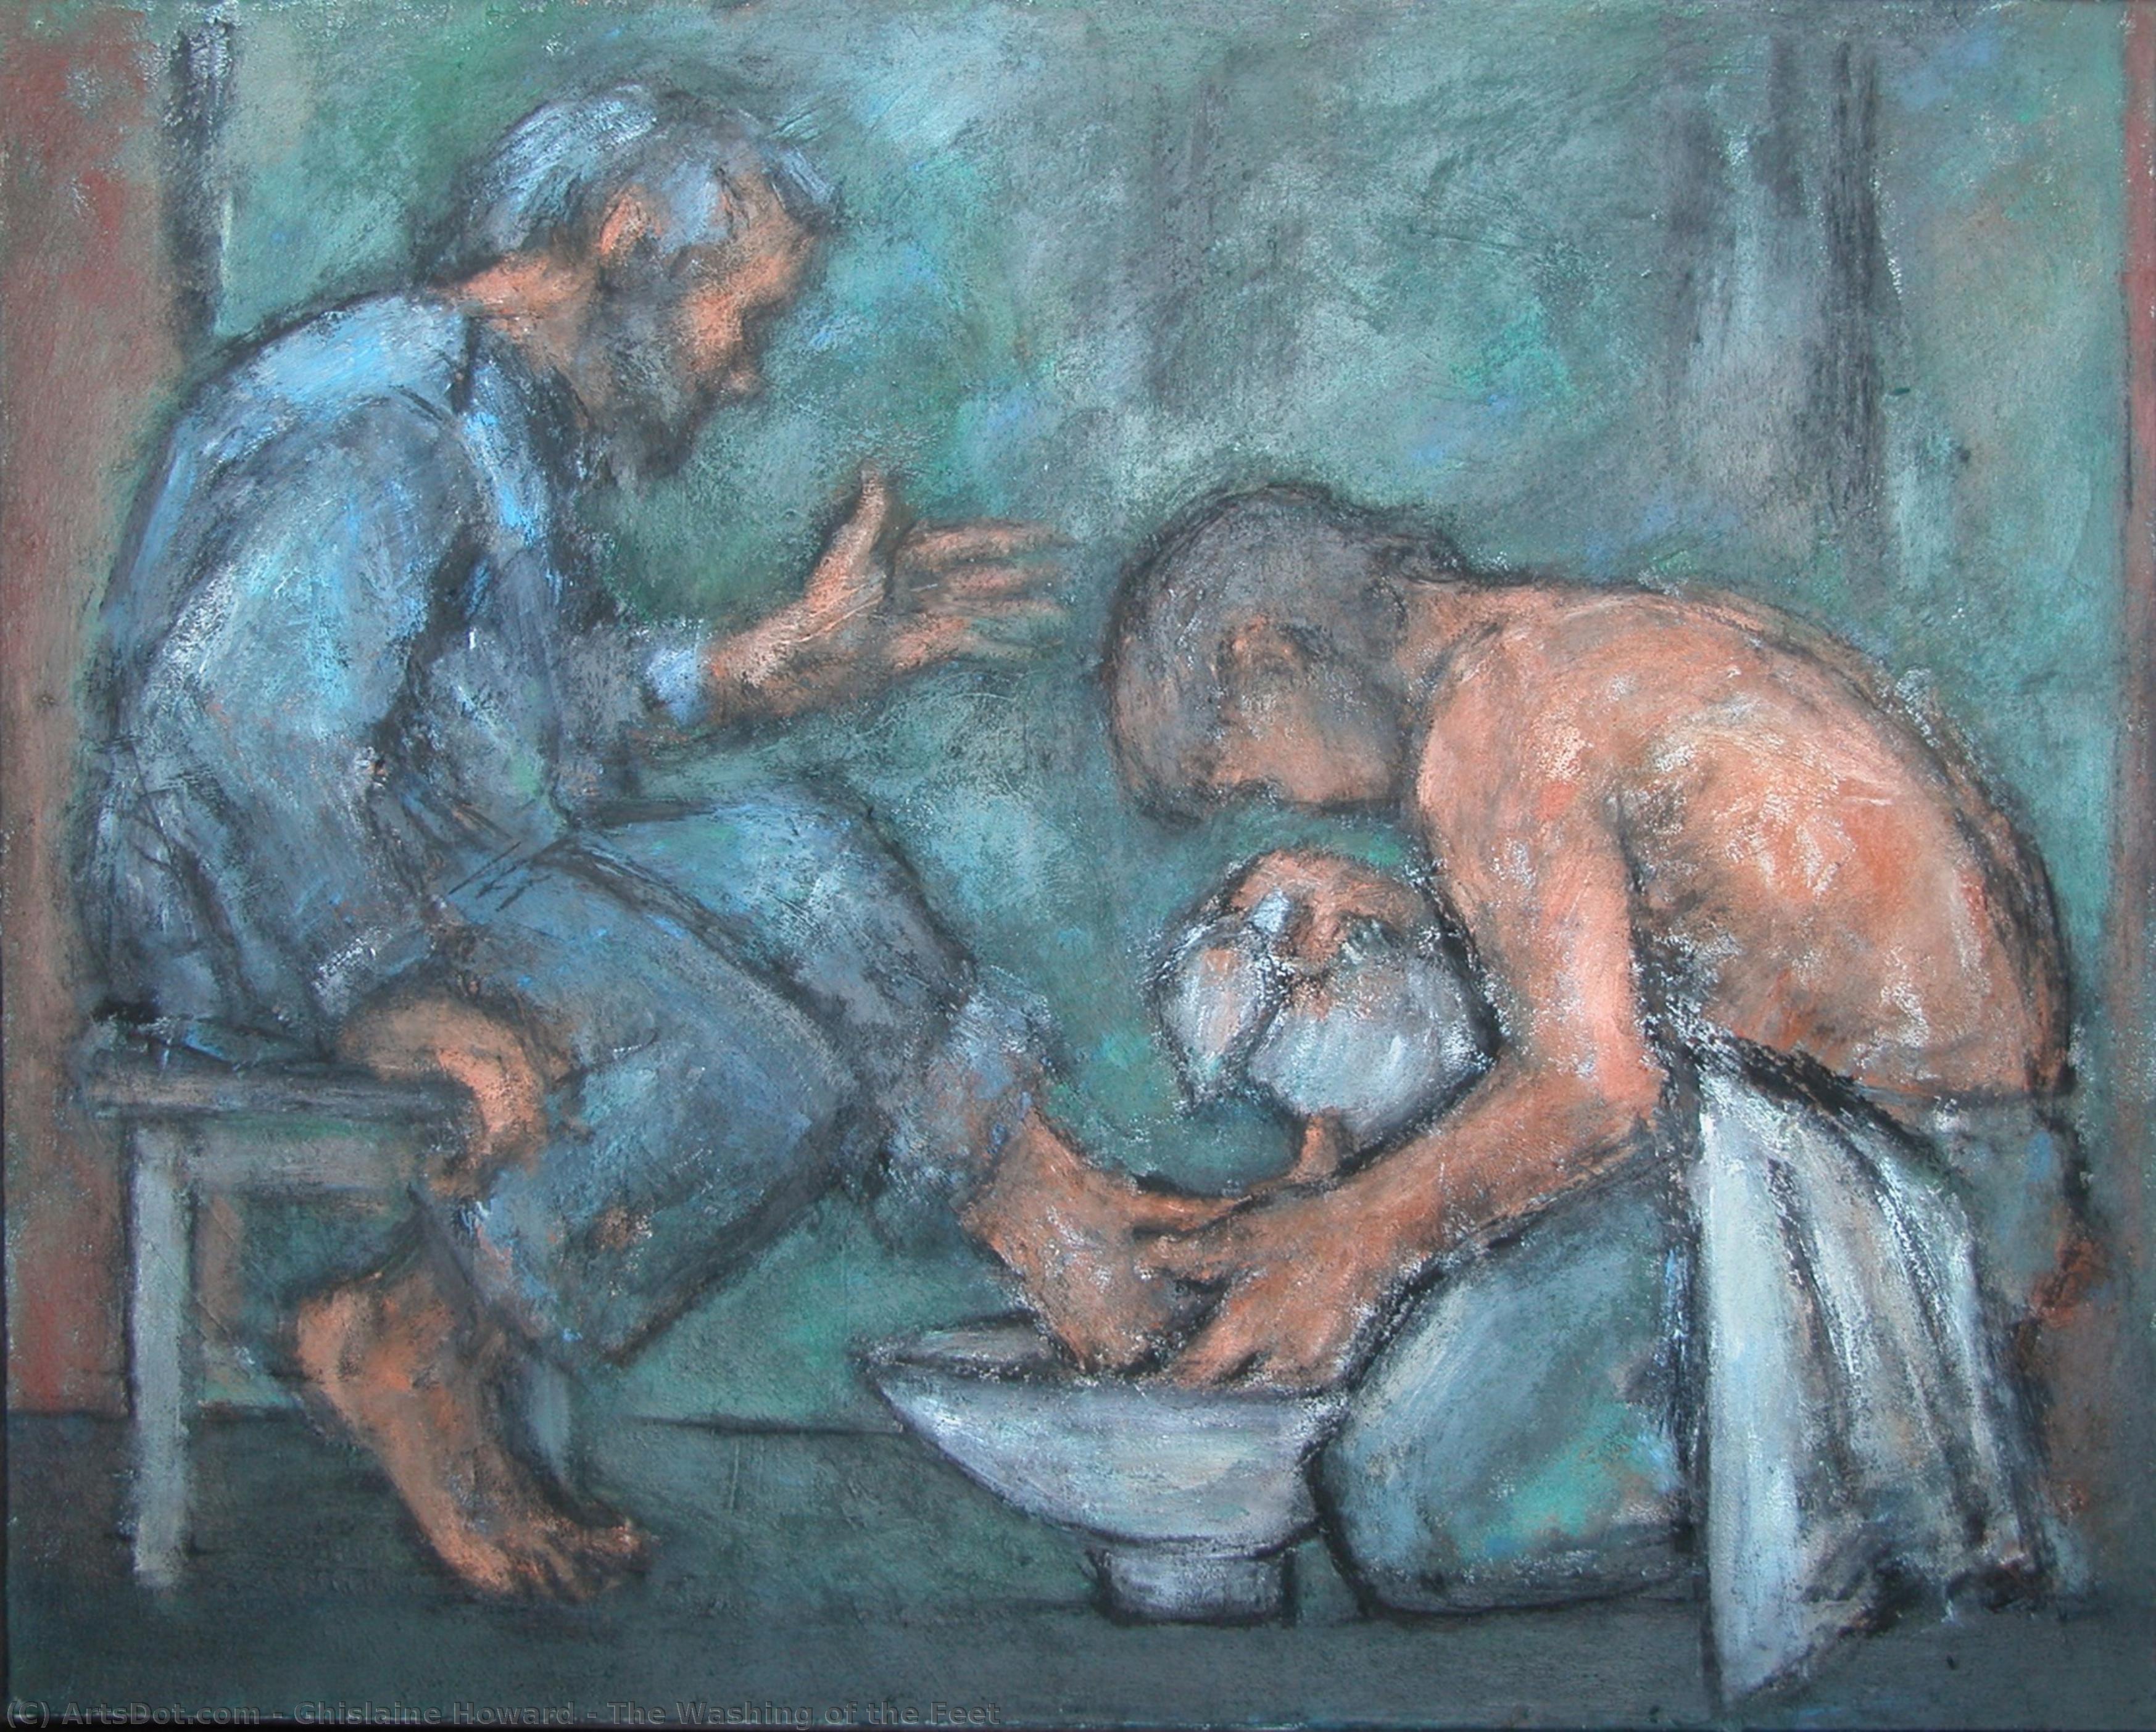 The Washing of the Feet, 2004 by Ghislaine Howard Ghislaine Howard | ArtsDot.com